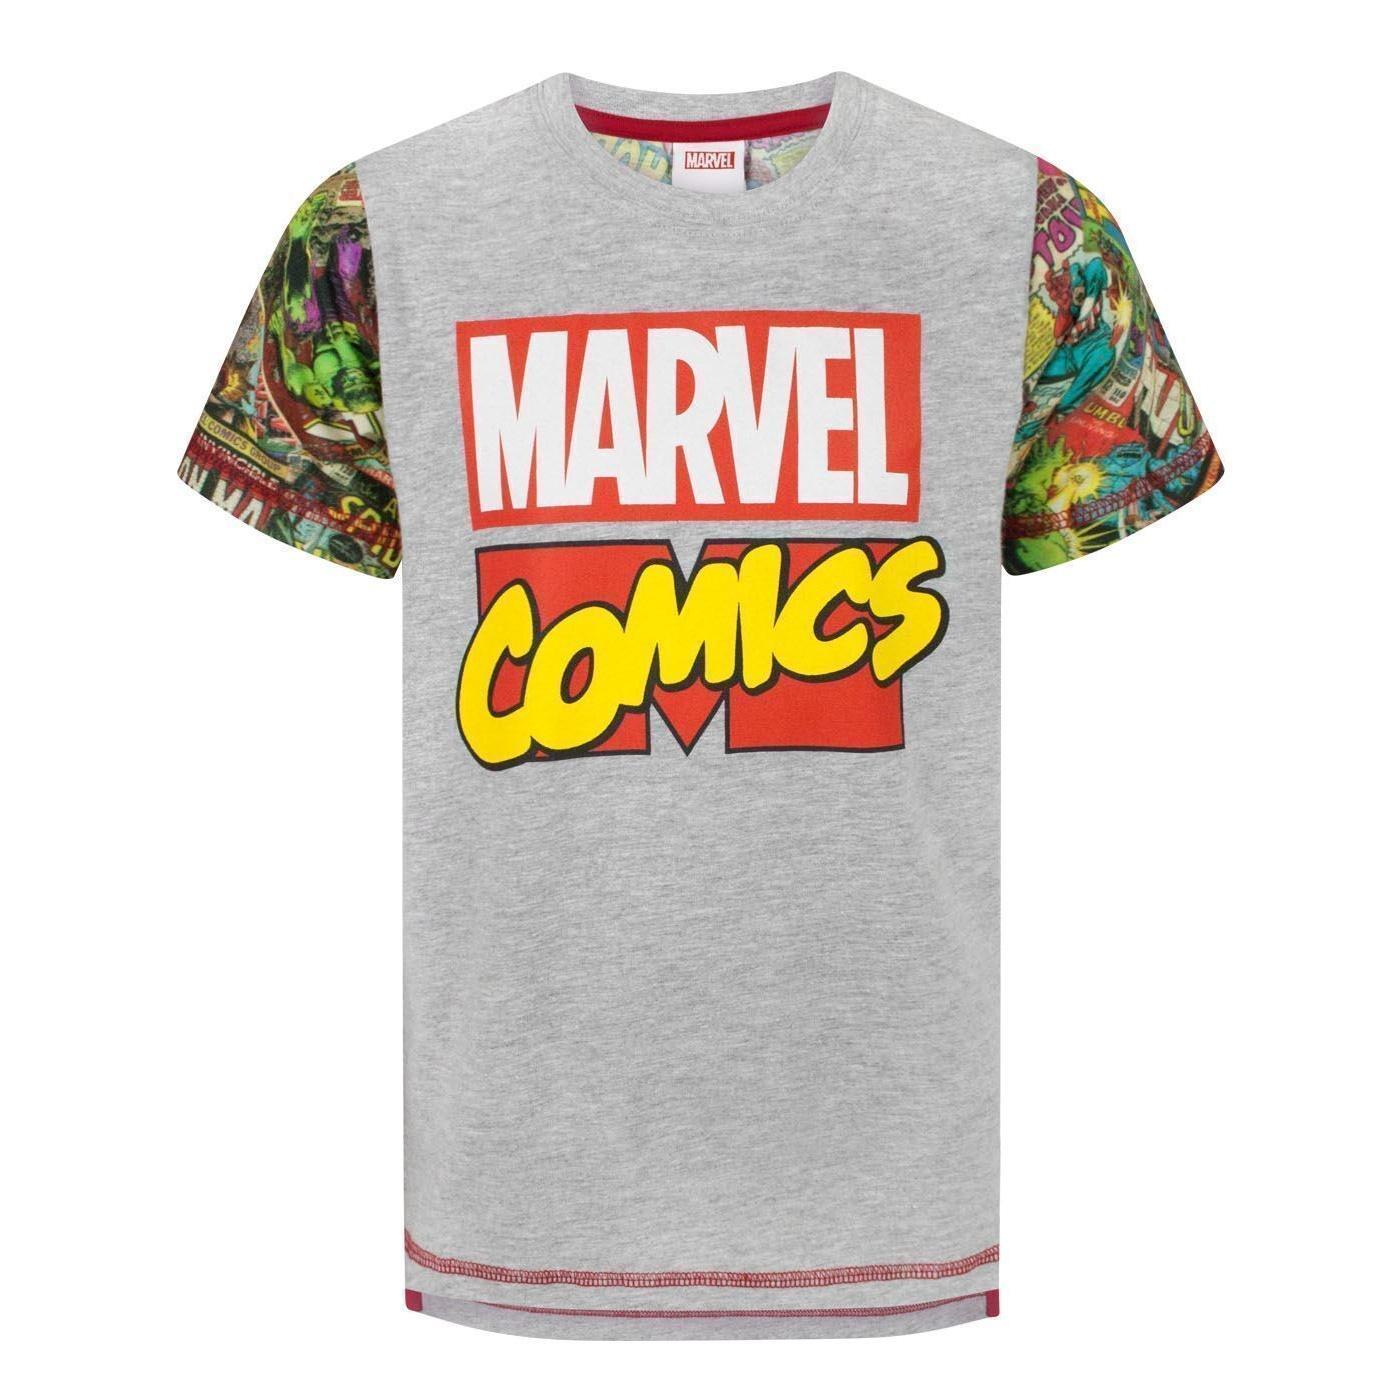 Marvel Comics Boys Printed T-Shirt (Heather Grey/Red/Green) (13-14 Years)